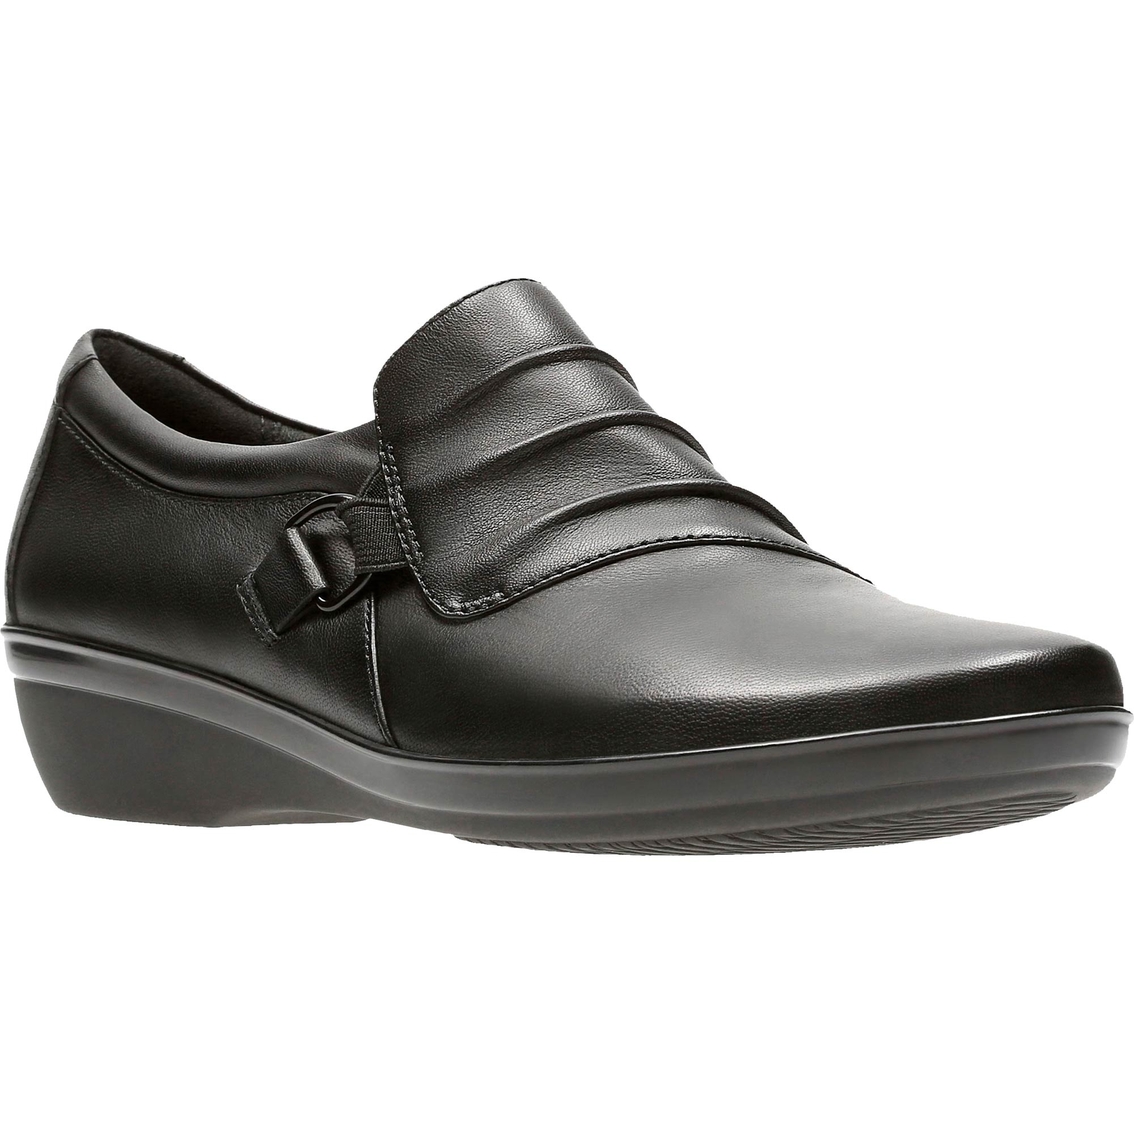 Clarks Everlay Heidi Comfort Shoes | Flats | Shoes | Shop The Exchange